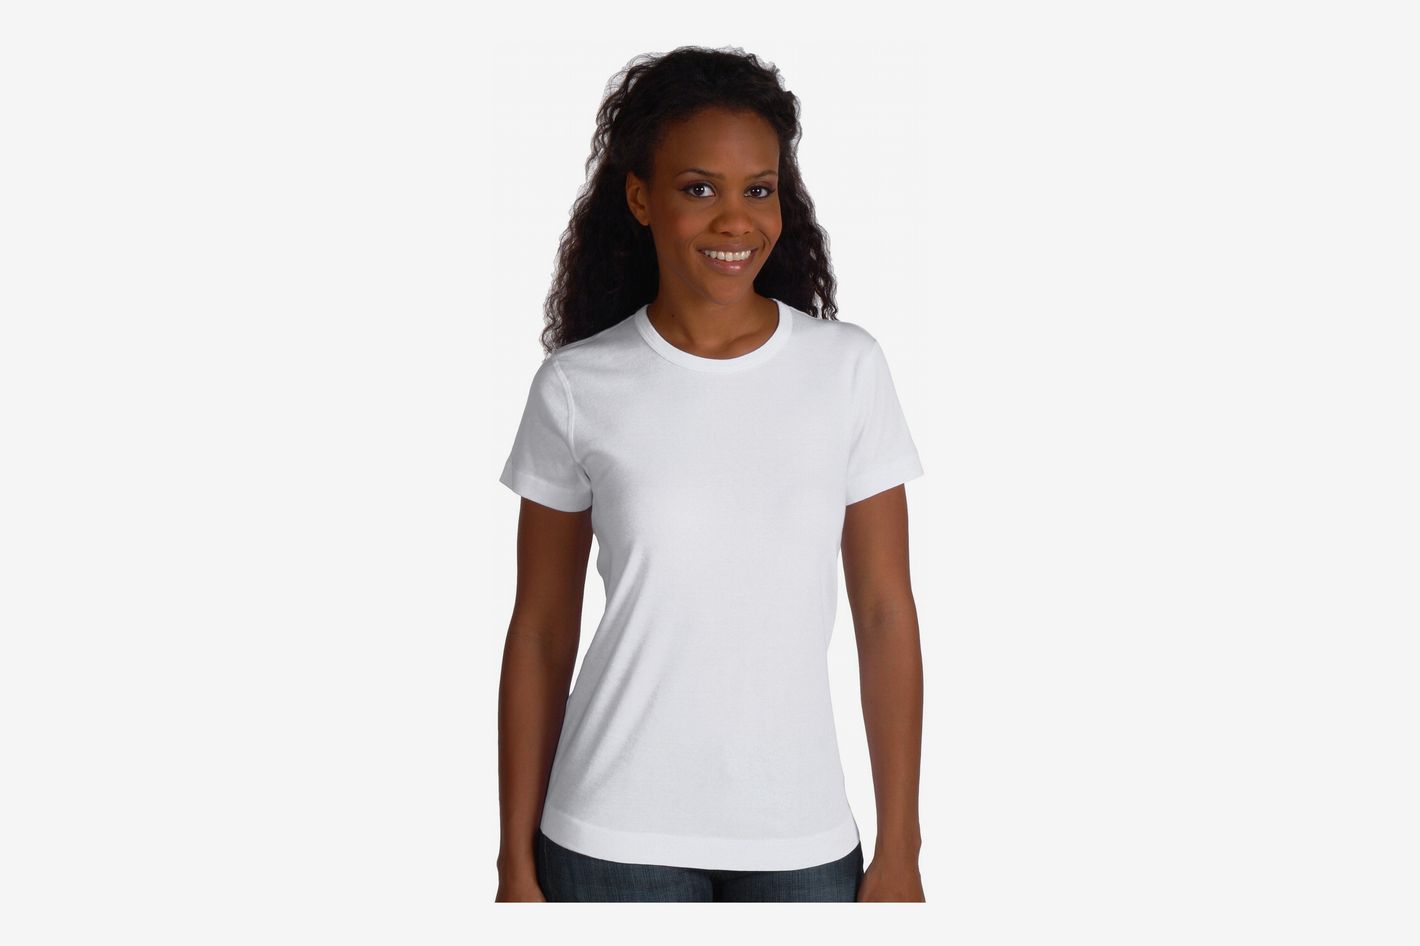 Top 10 Best White T-shirts for Women 2019 – Buy lehenga choli online